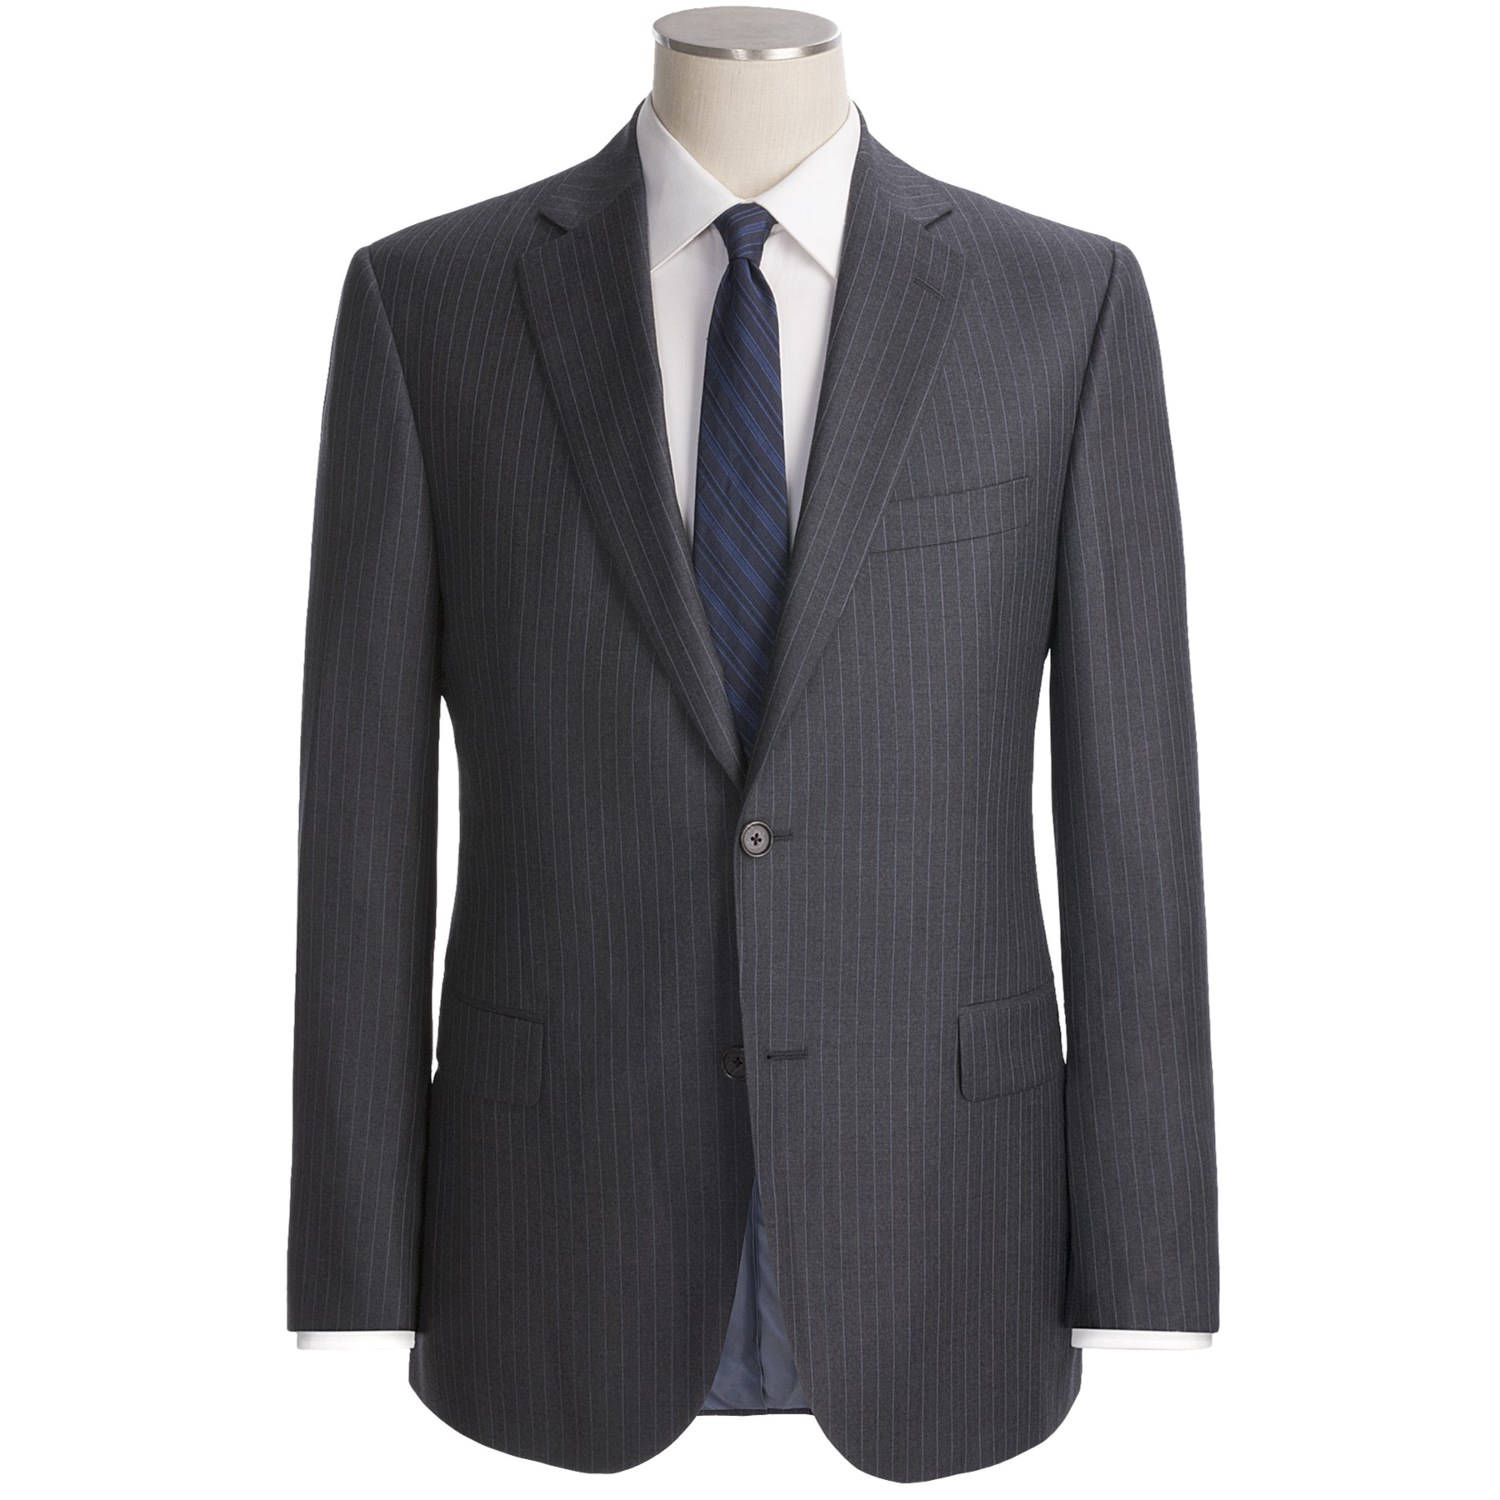 Suit Trim Fit Loro Piana Wool For Men In Navy Stripe P 5025j 01 1500